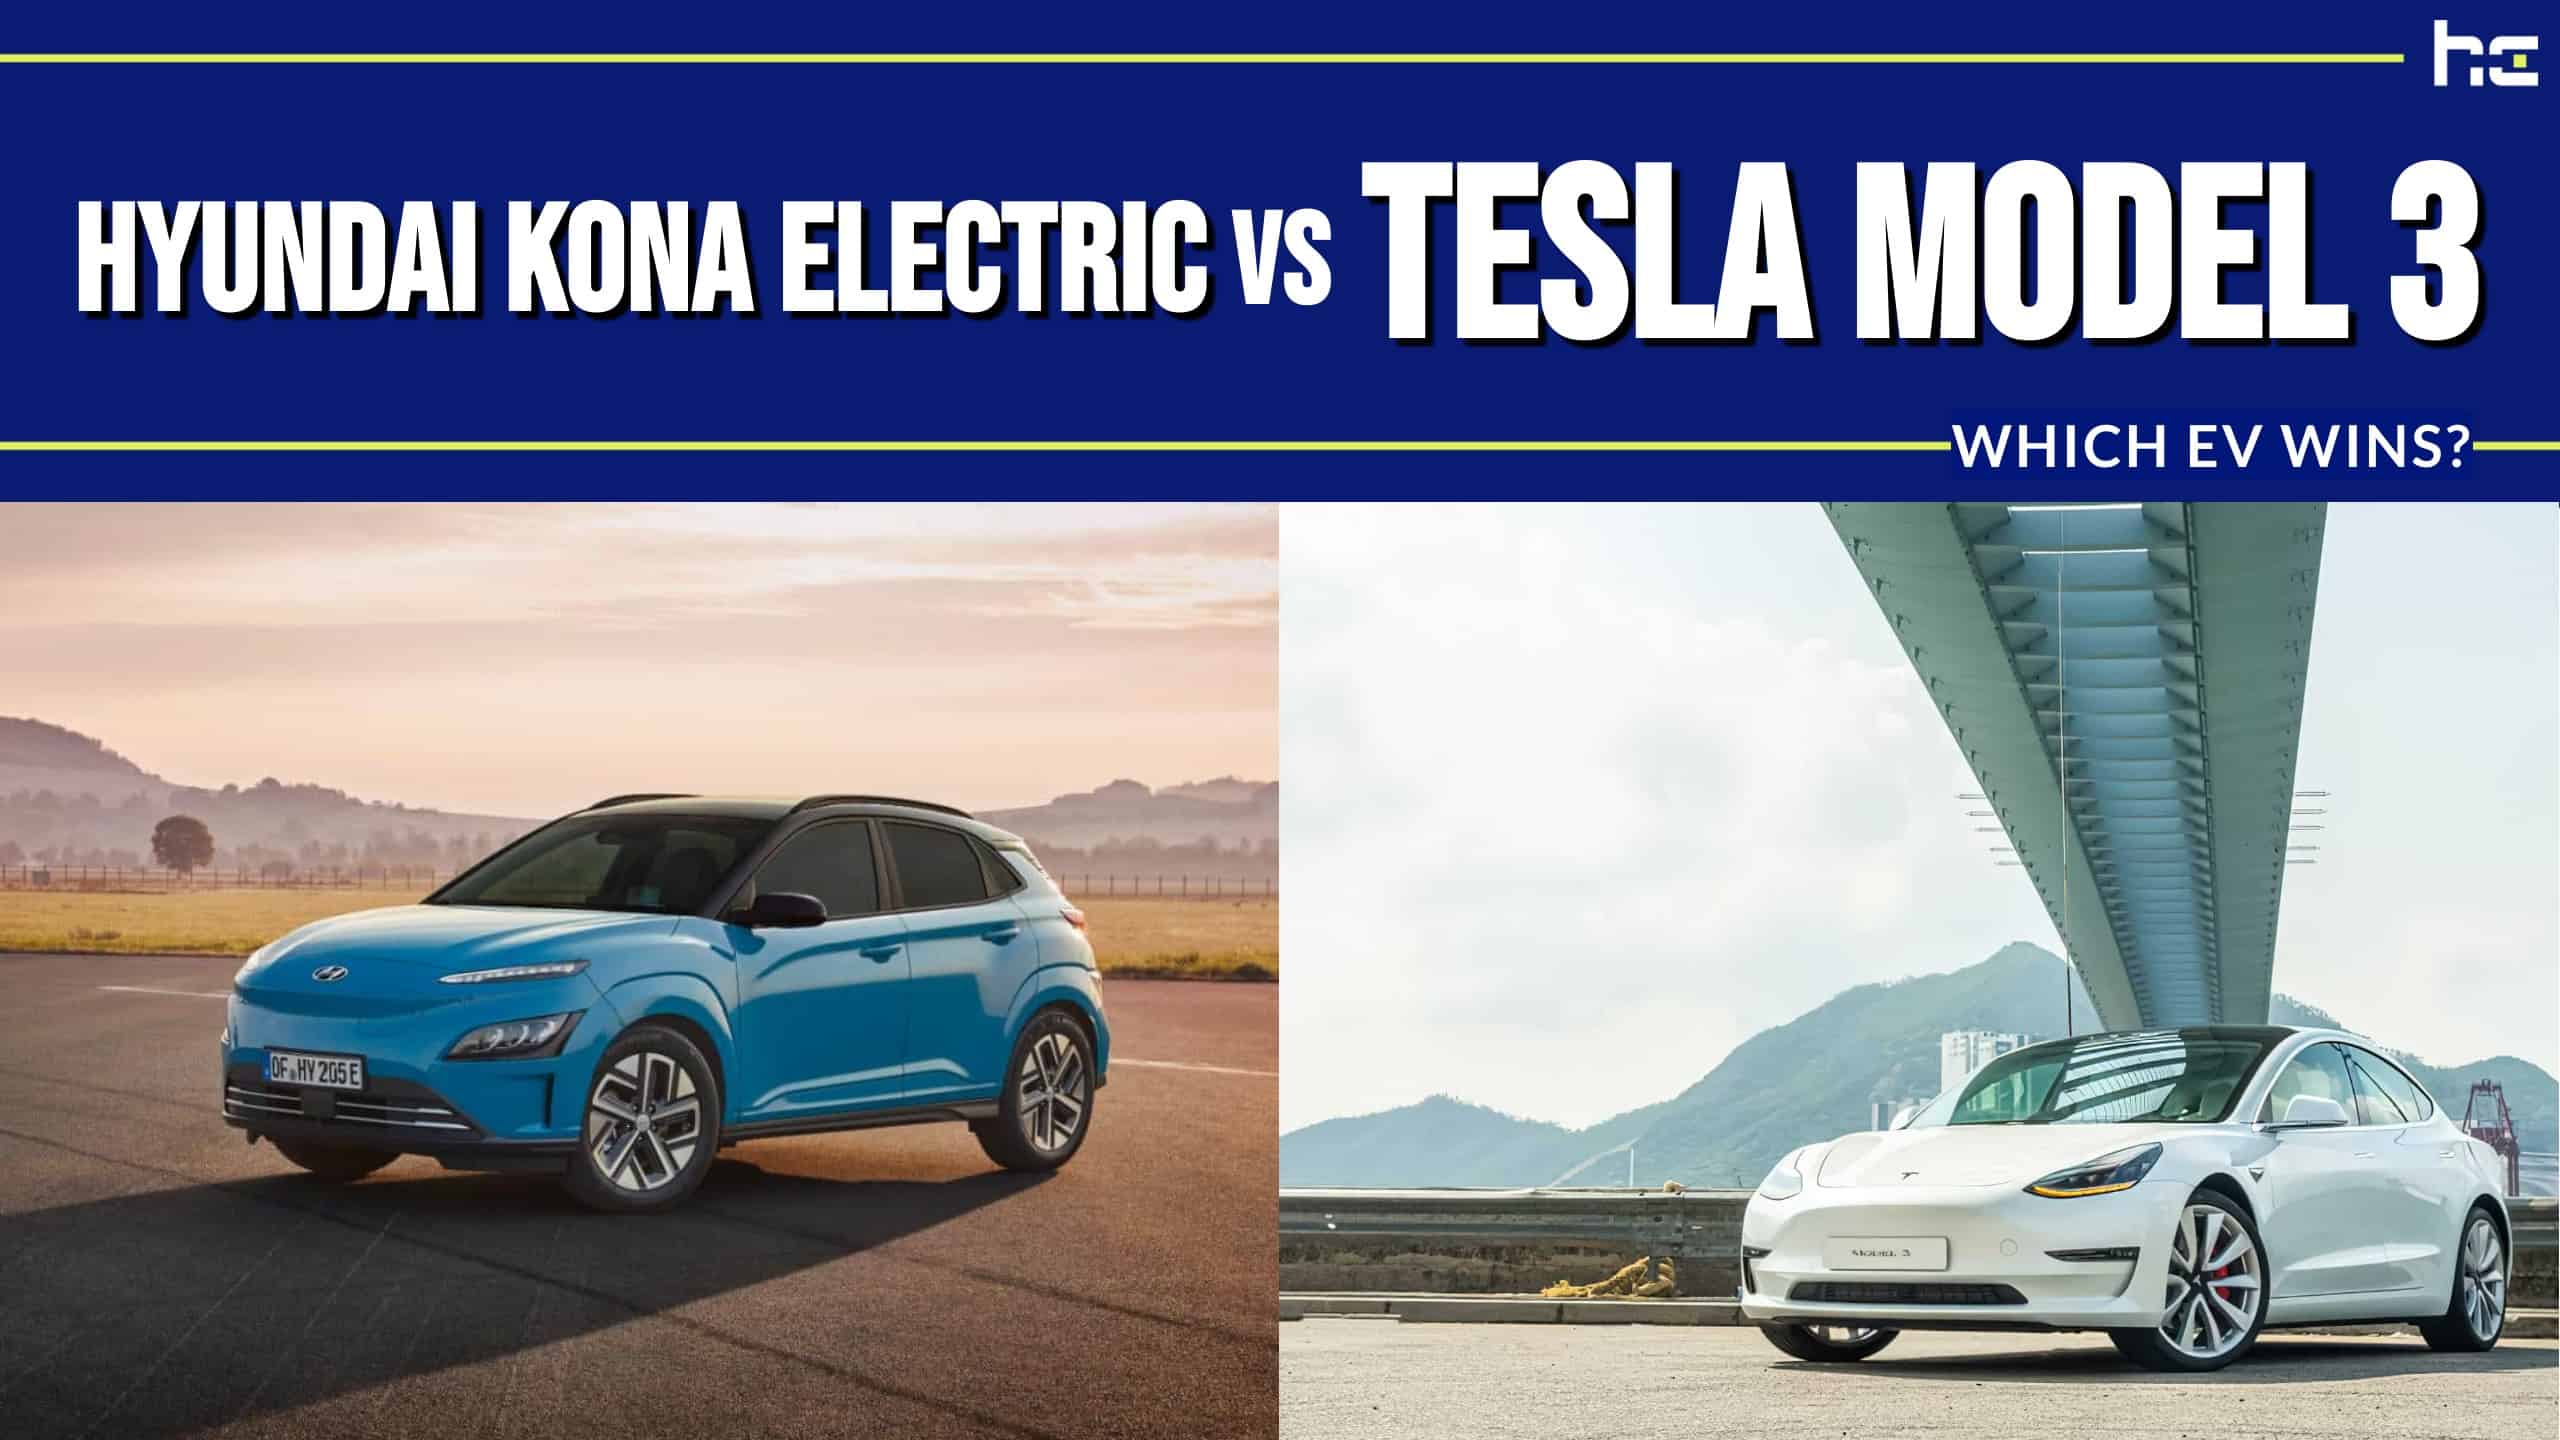 Hyundai Kona Electric vs Tesla Model 3 comparison image.